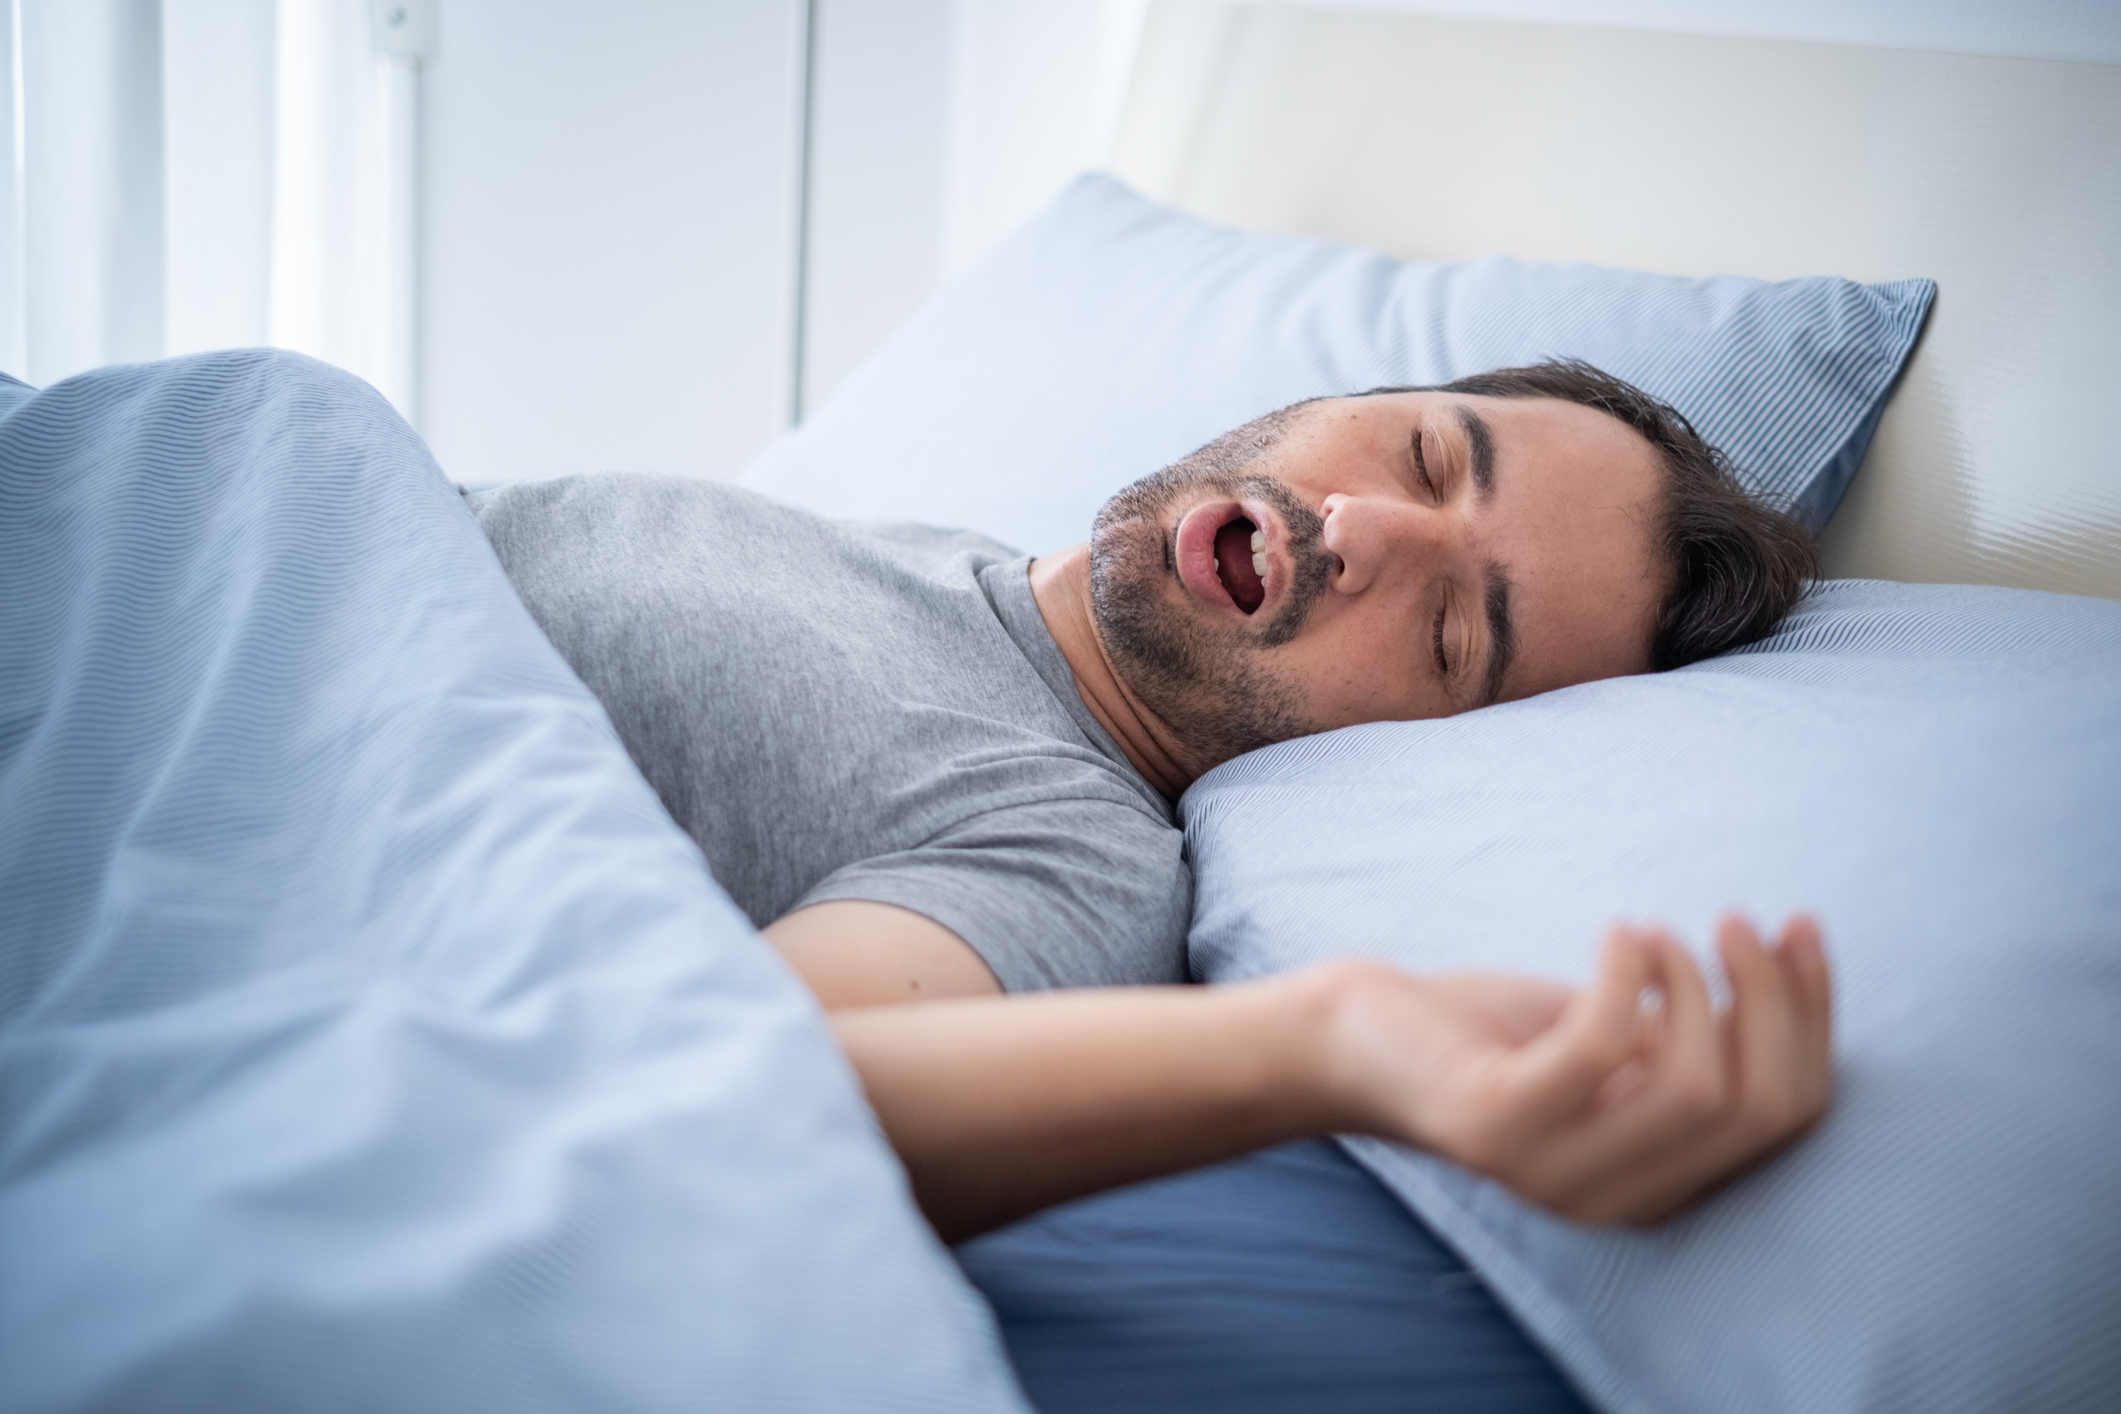 Sleep apnea’s direct connection to cognitive decline